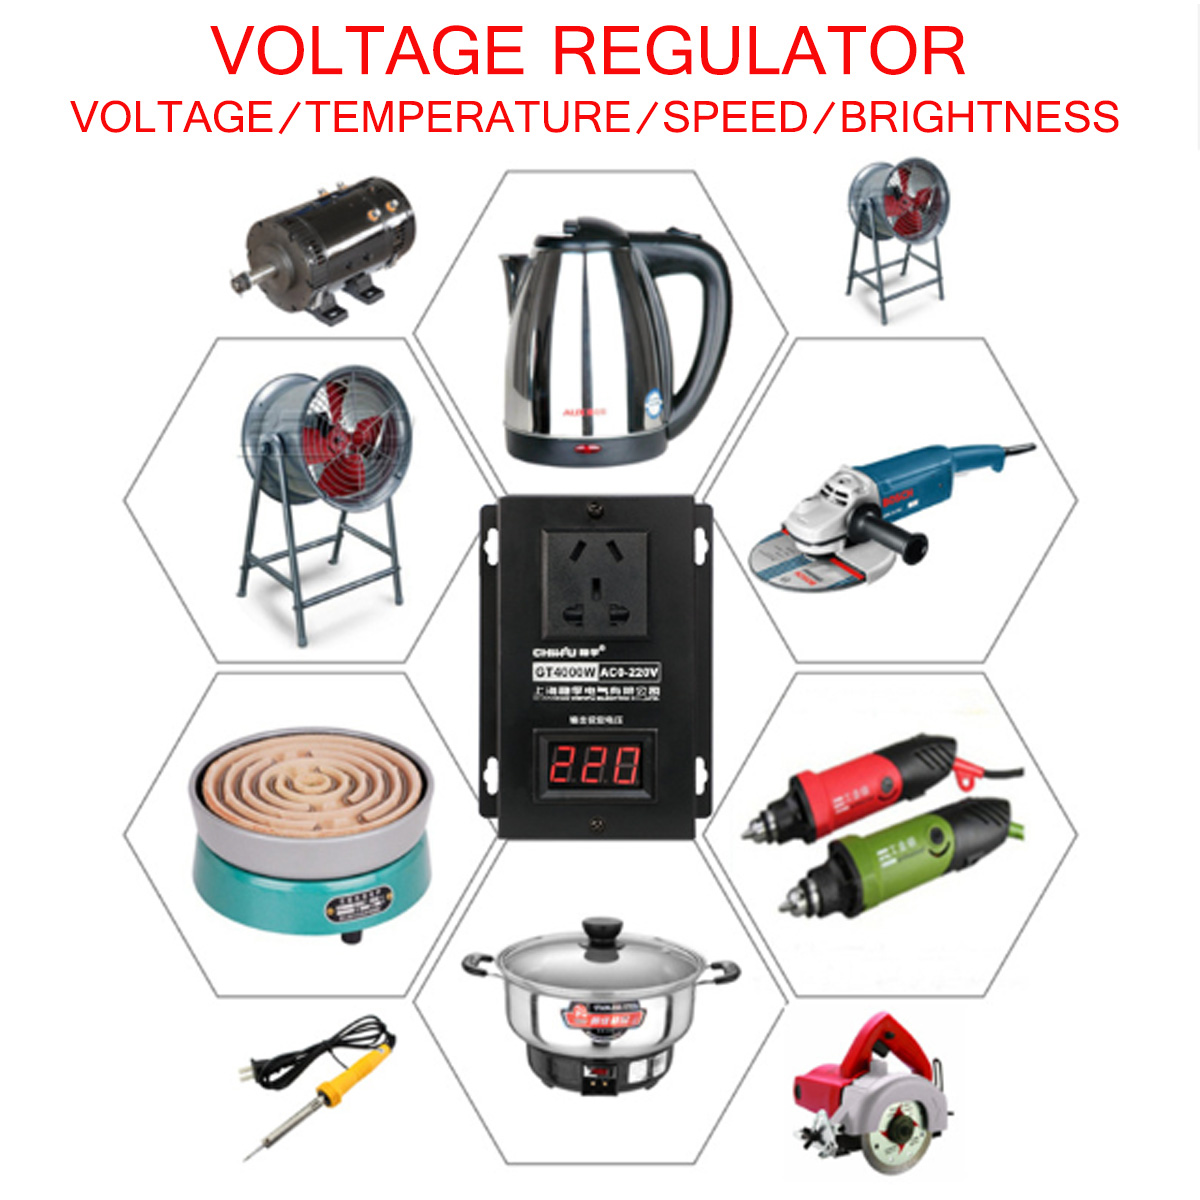 AC-0-220V-4000W-Variable-Voltage-Regulator-Power-Drill-Motor-Speed-Fan-Control-Controller-RA-1504030-3